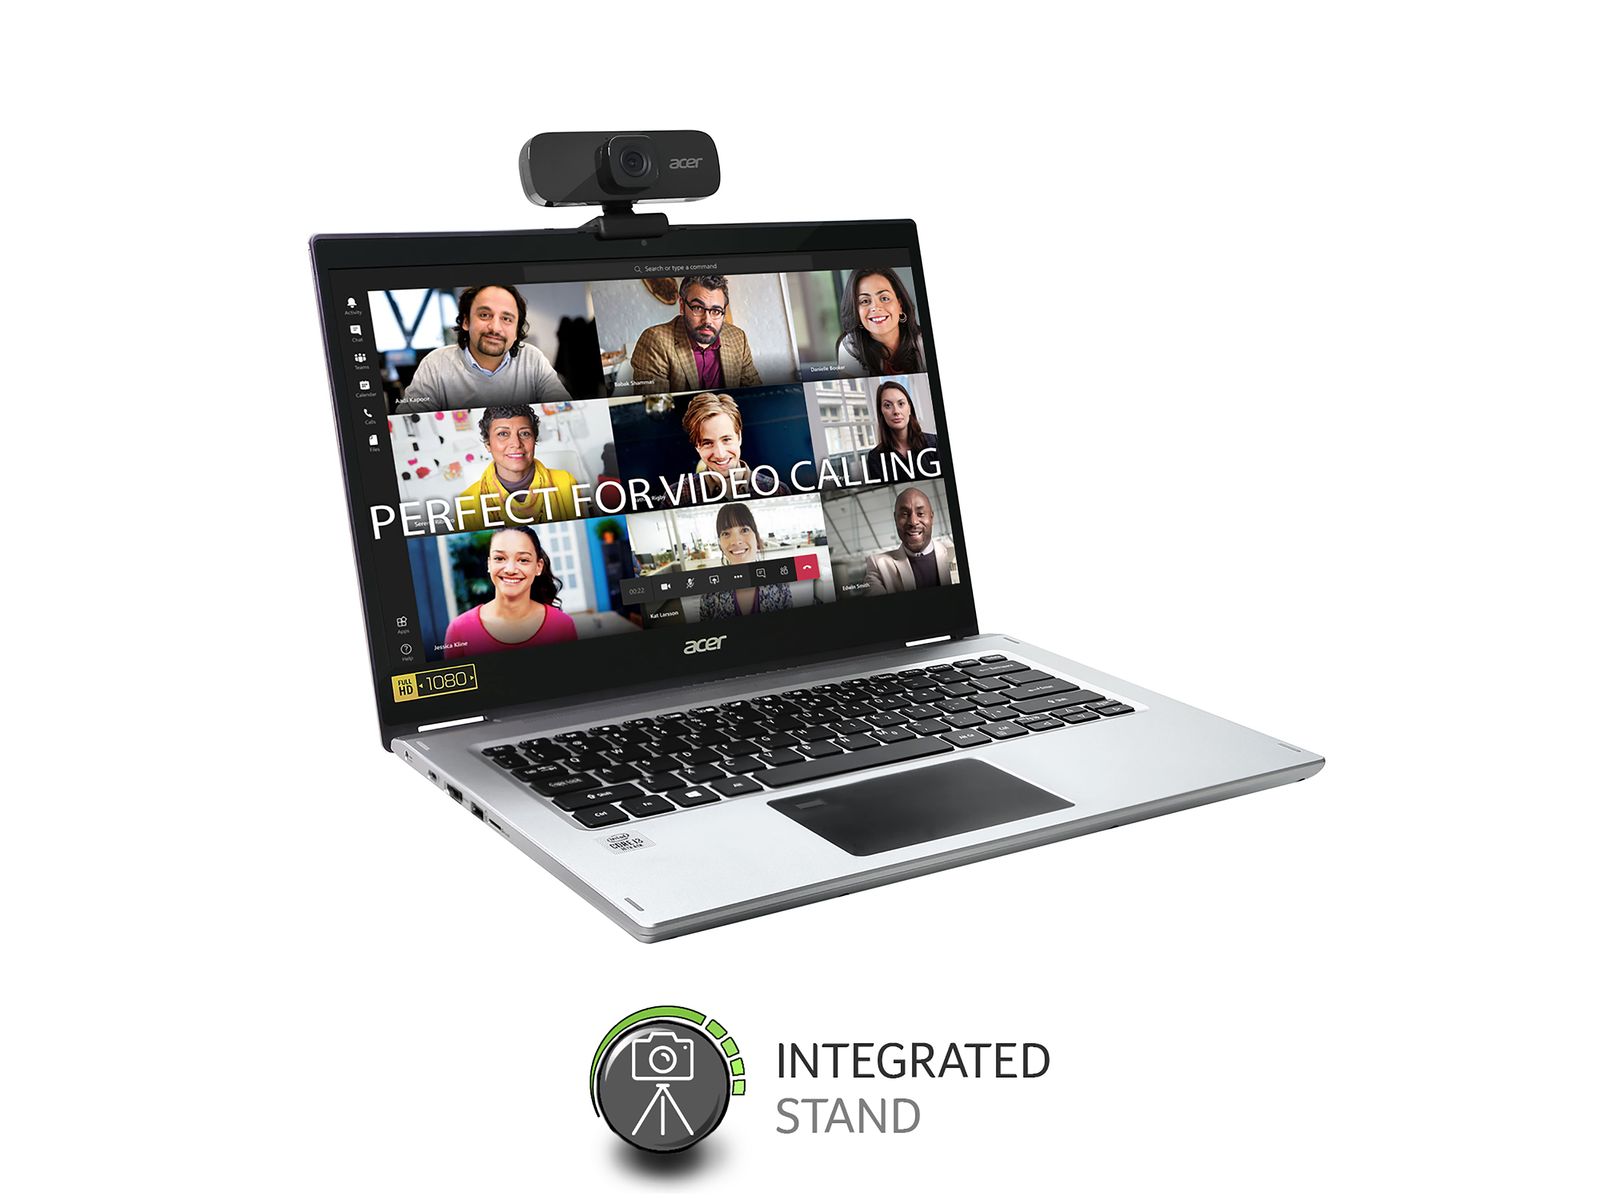 Acer QHD Konferenz Webcam (5 Megapixel, 30 FPS, 70° Weitwinkel, integriertes Noise Cancelling Mikro, kompatibel mit Win, Linux, Mac und Android) schwarz